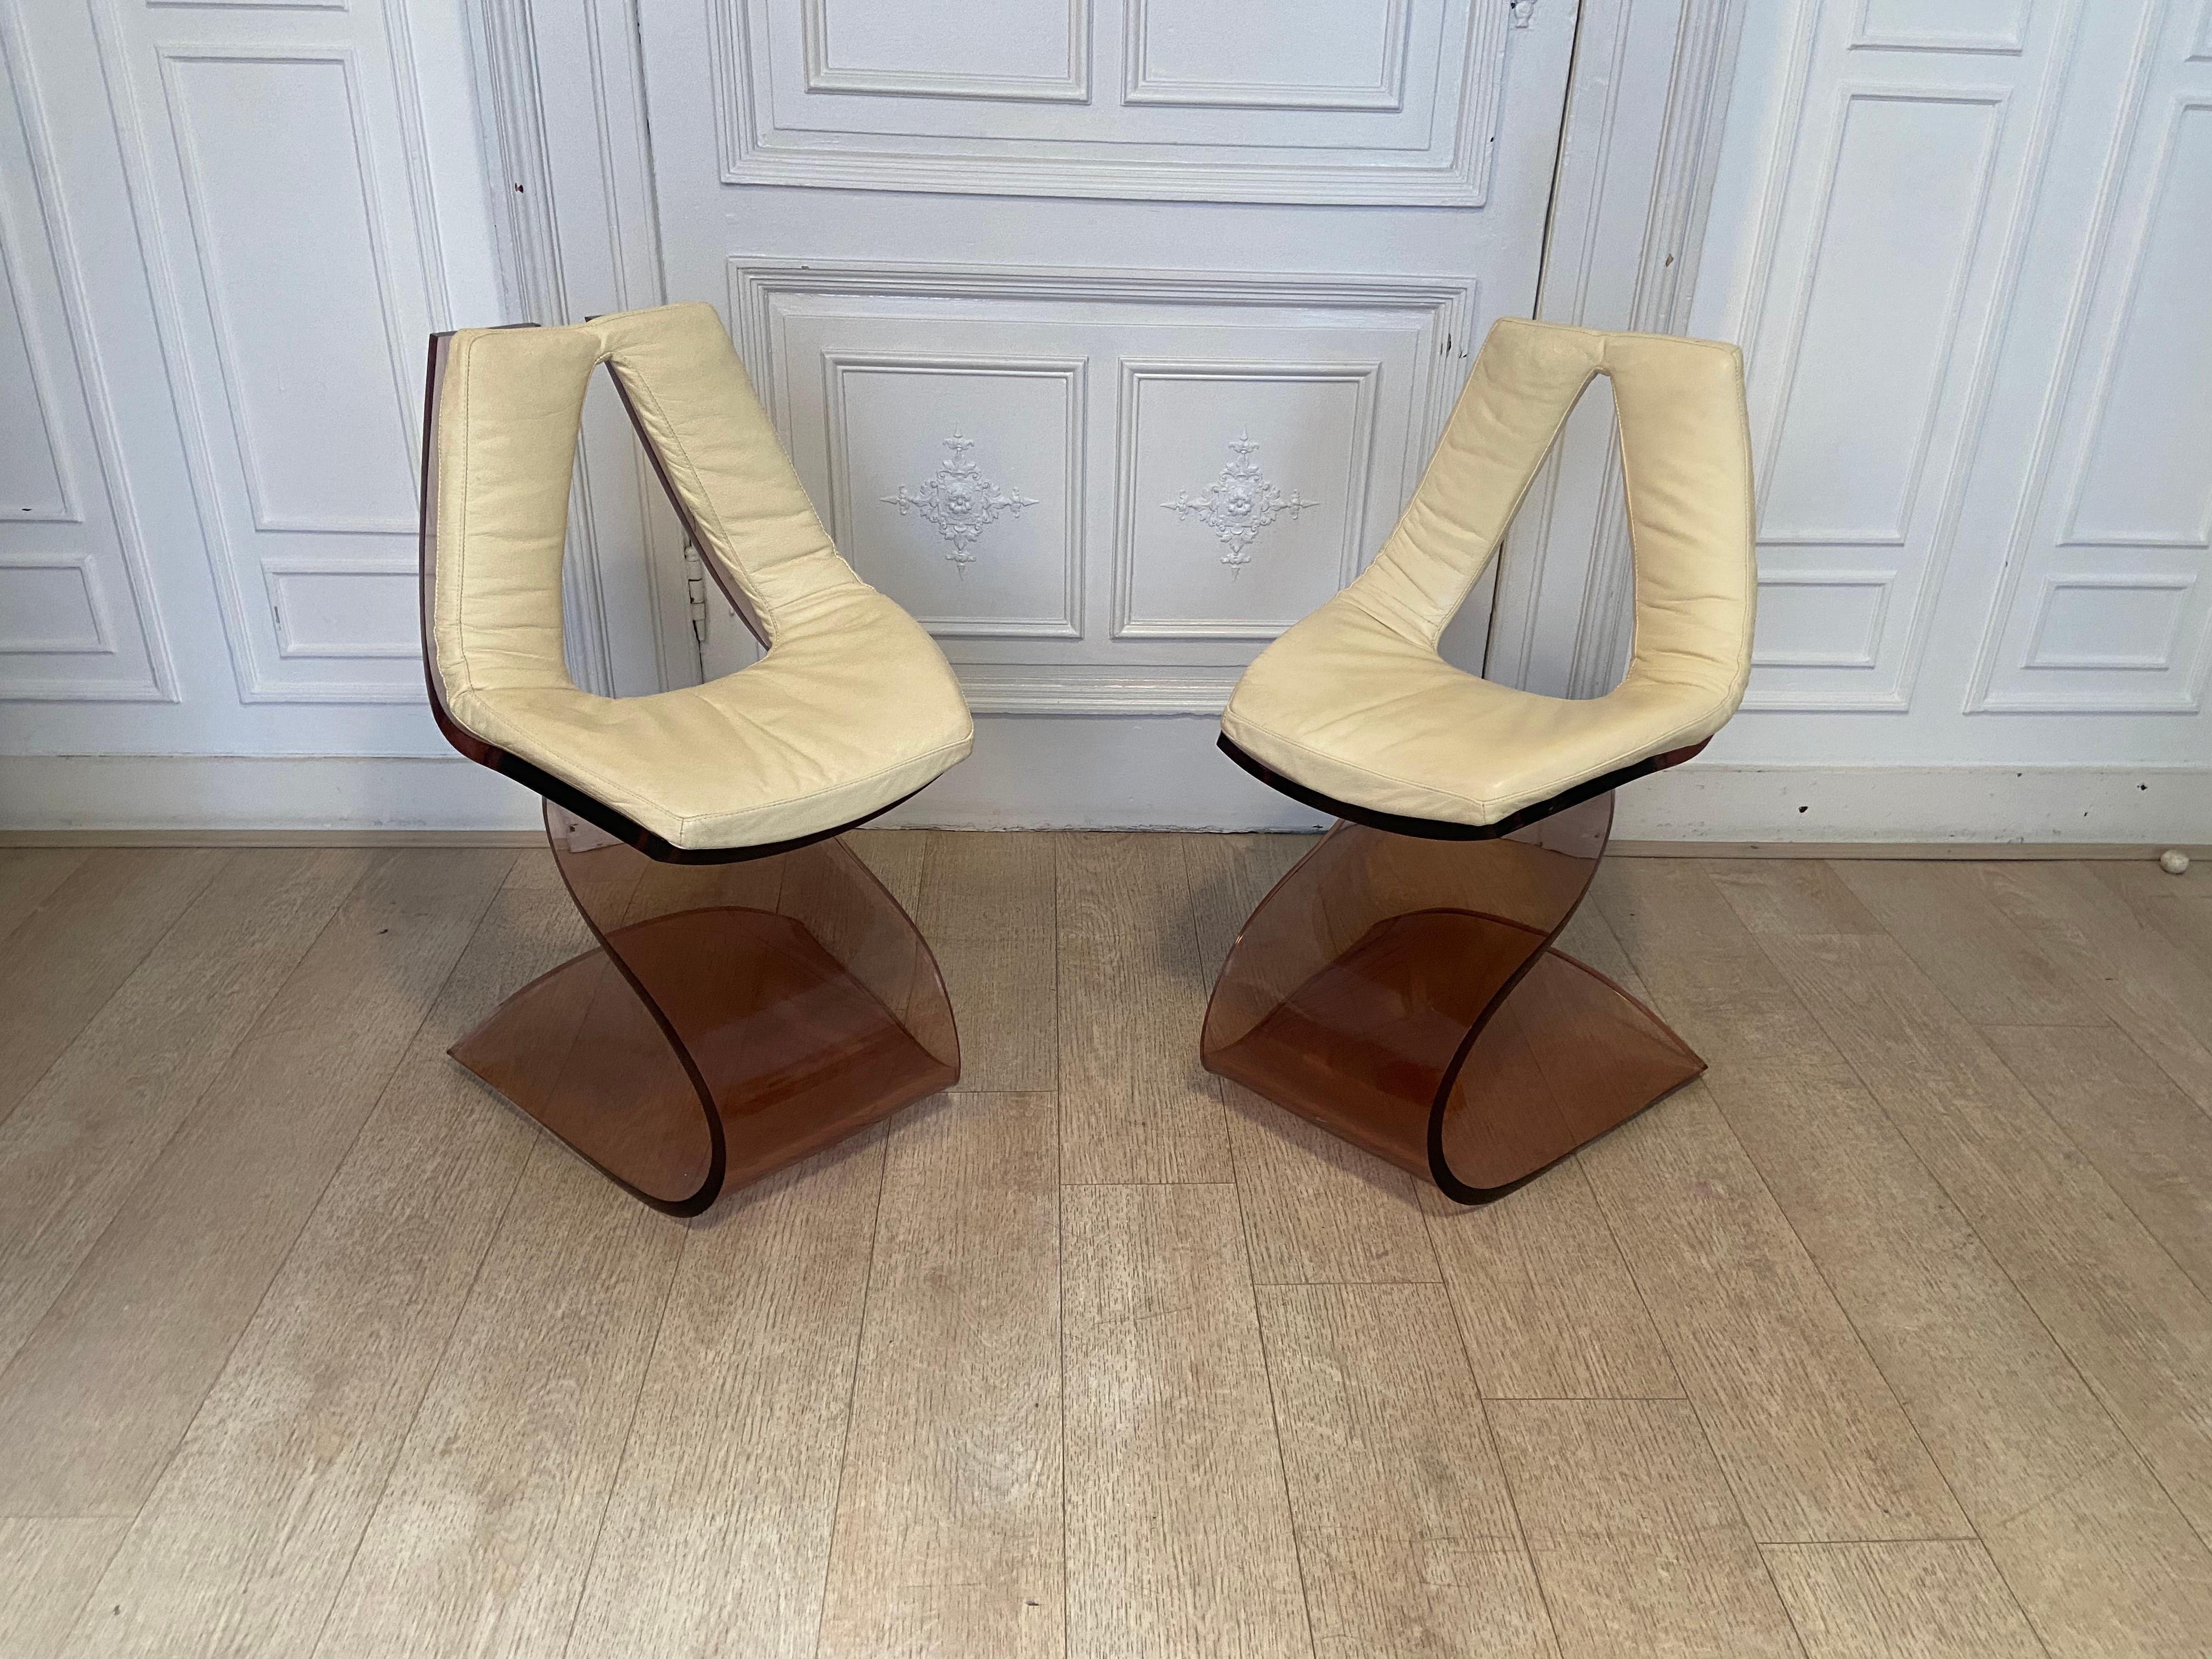 Michel Dumas Chairs, Plexiglass, 1970s For Sale 2